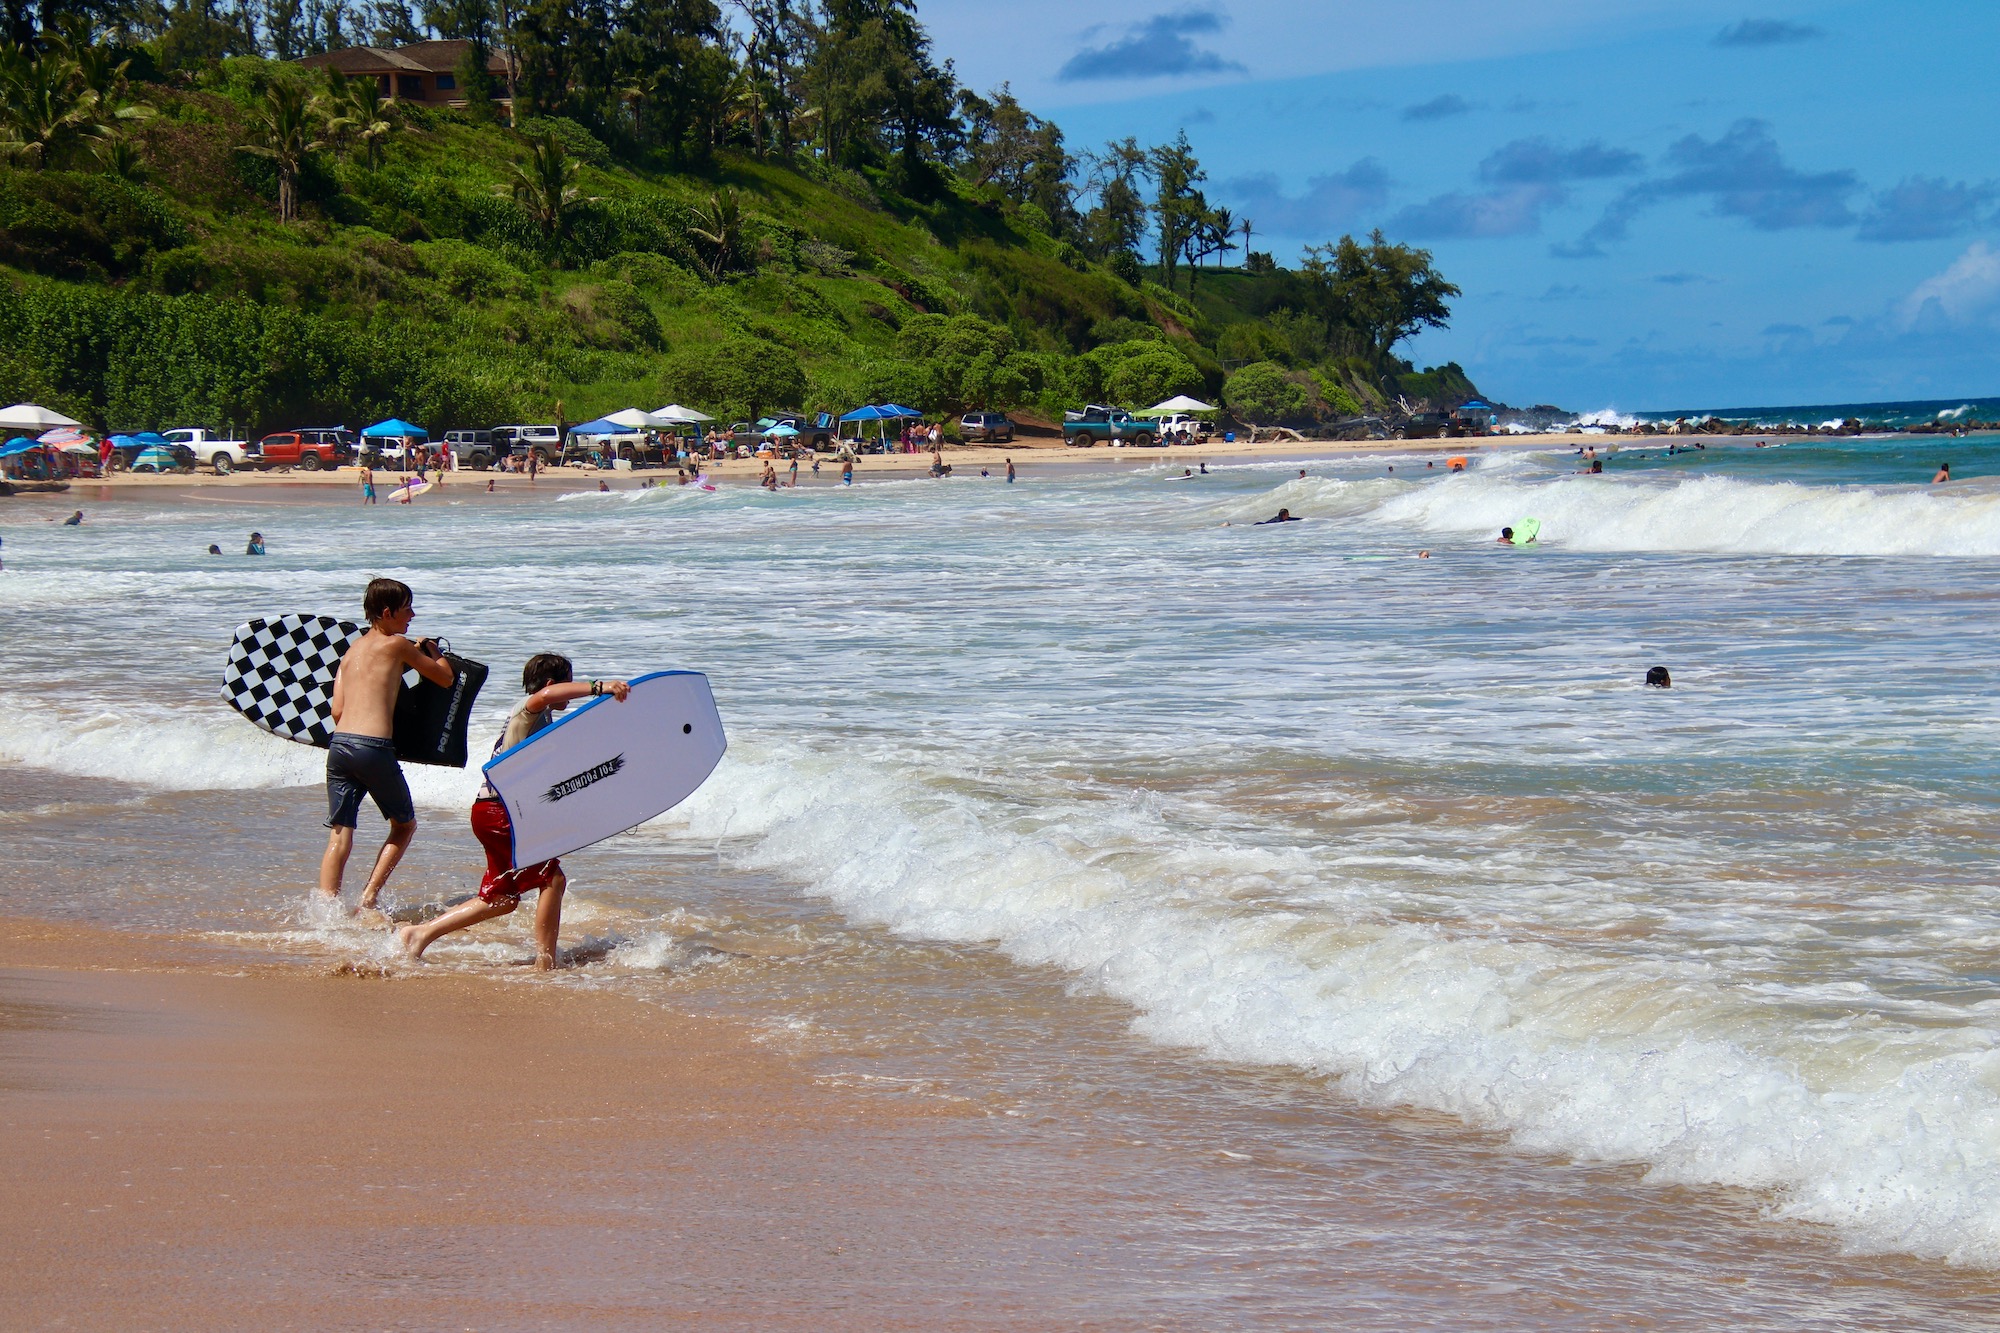 Kauai boogie boarding